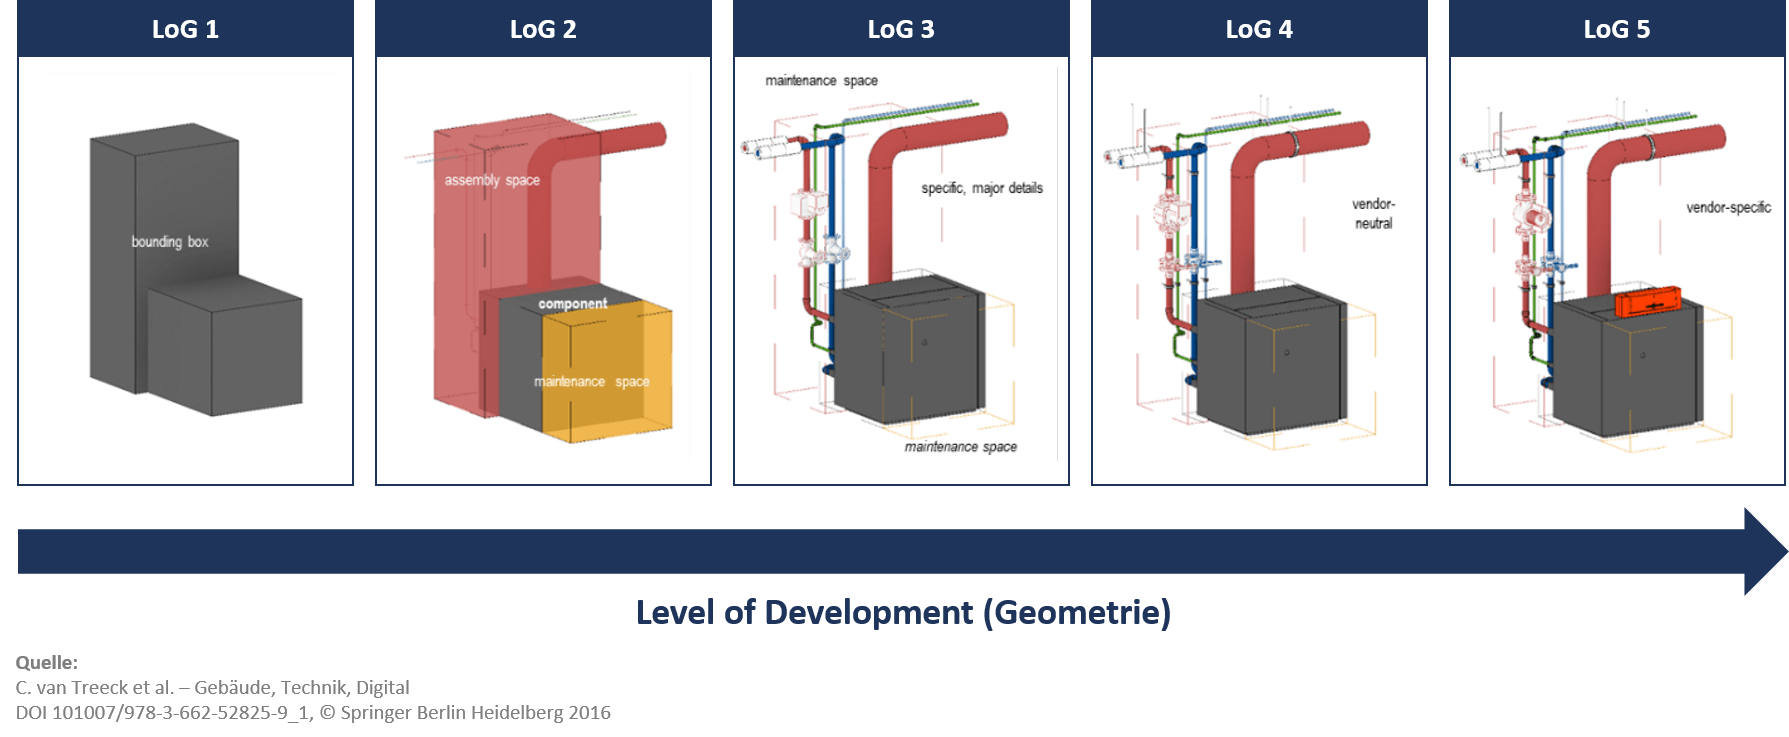 Graphic_level_of_development_geometry